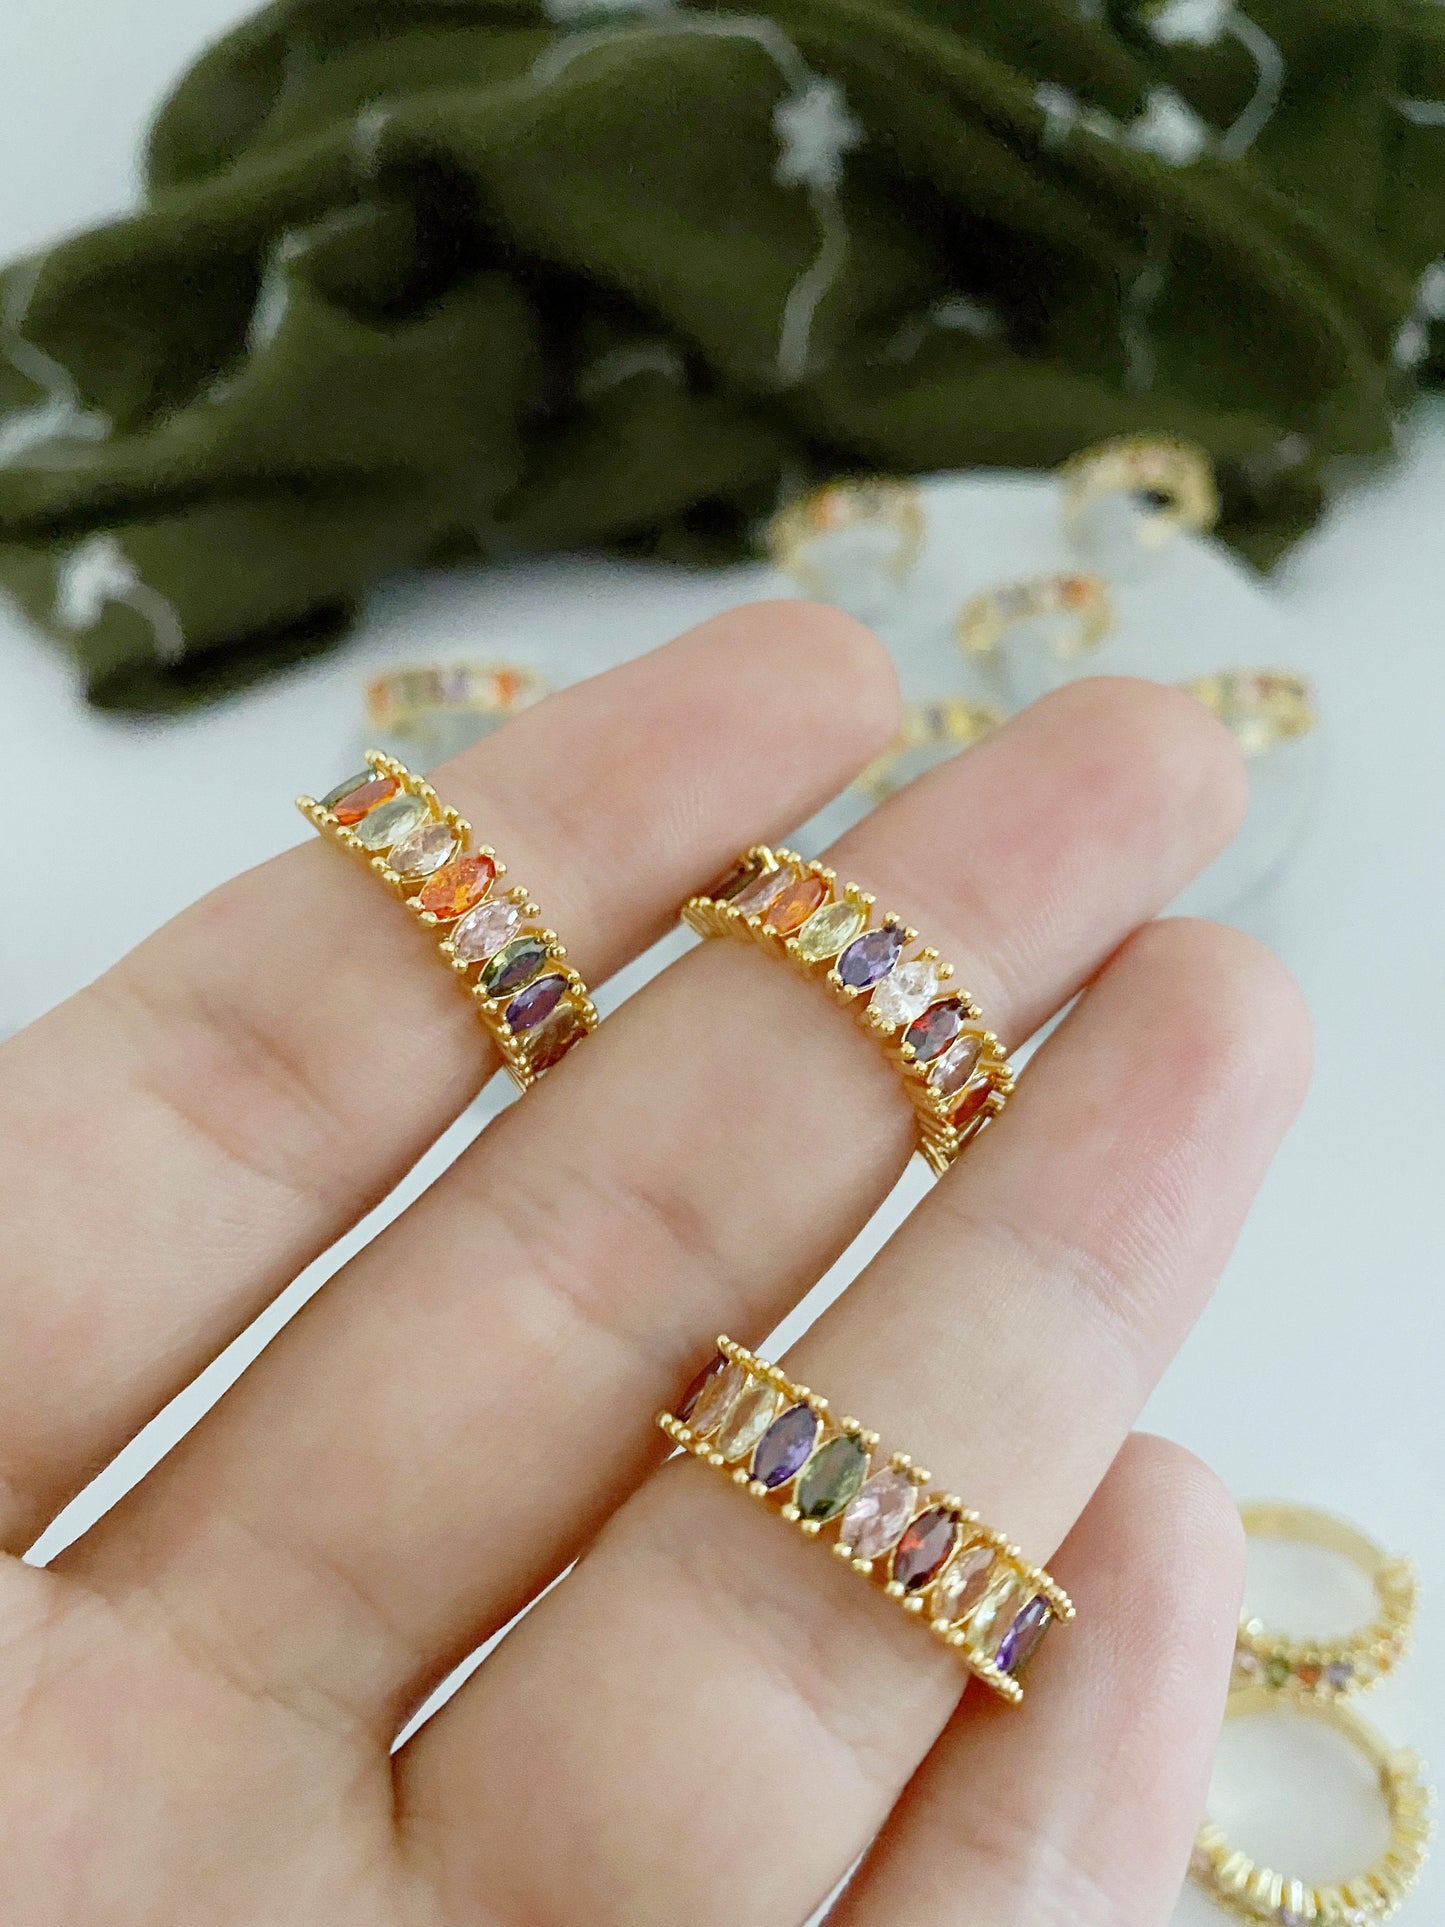 Rainbow Baguette Eternity Ring • Adjustable Multicolor Crystal Ring